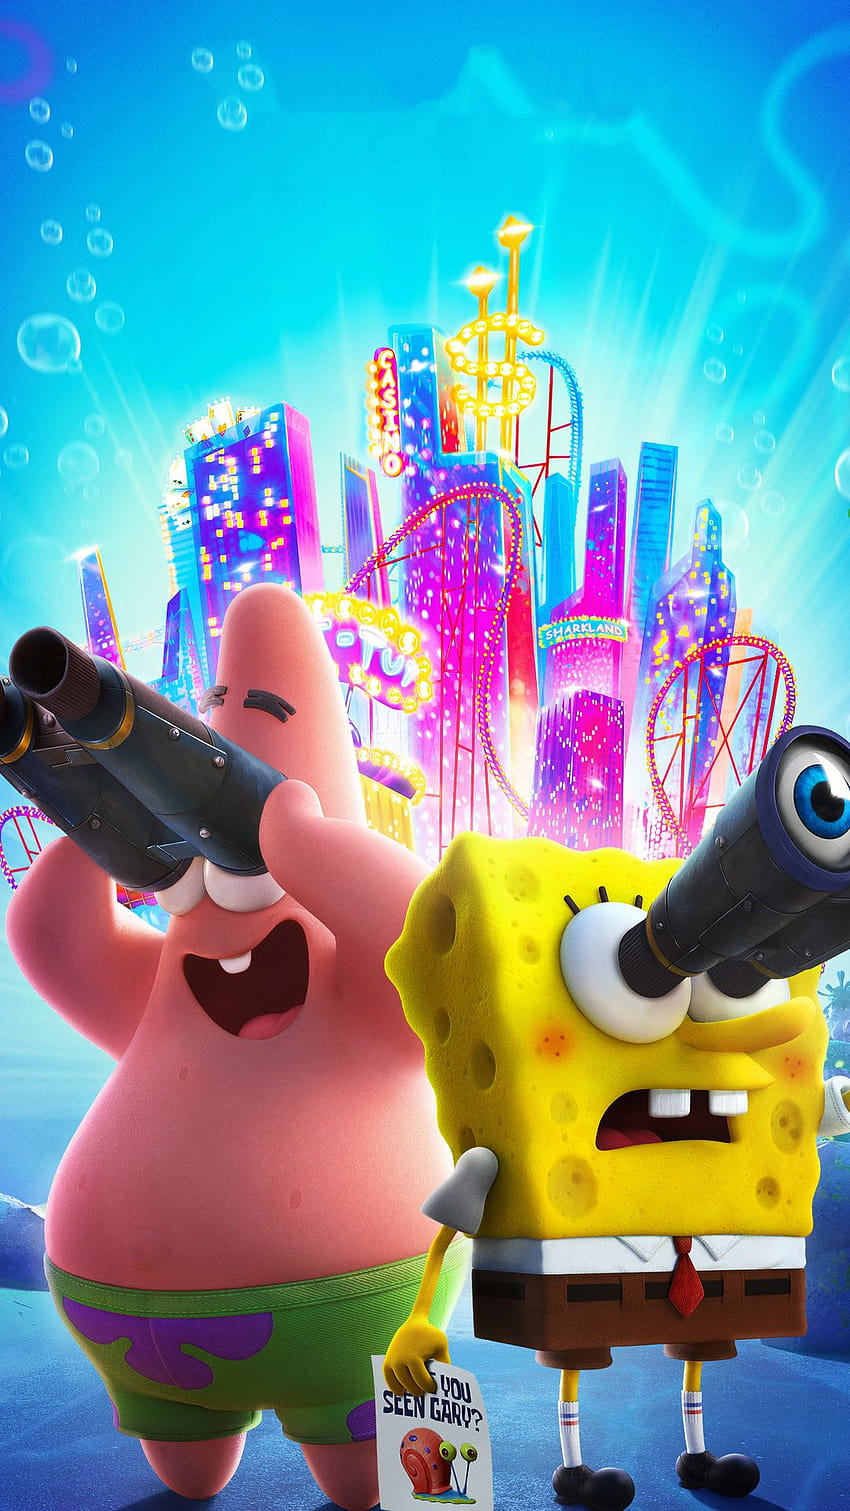 1080x1920 The SpongeBob Movie Sponge On The Run 2020 Iphone 7,6s,6 Plus, Pixel xl ,One Plus 3,3t,5 , 배경 및 귀여운 스폰지밥 HD 전화 배경 화면